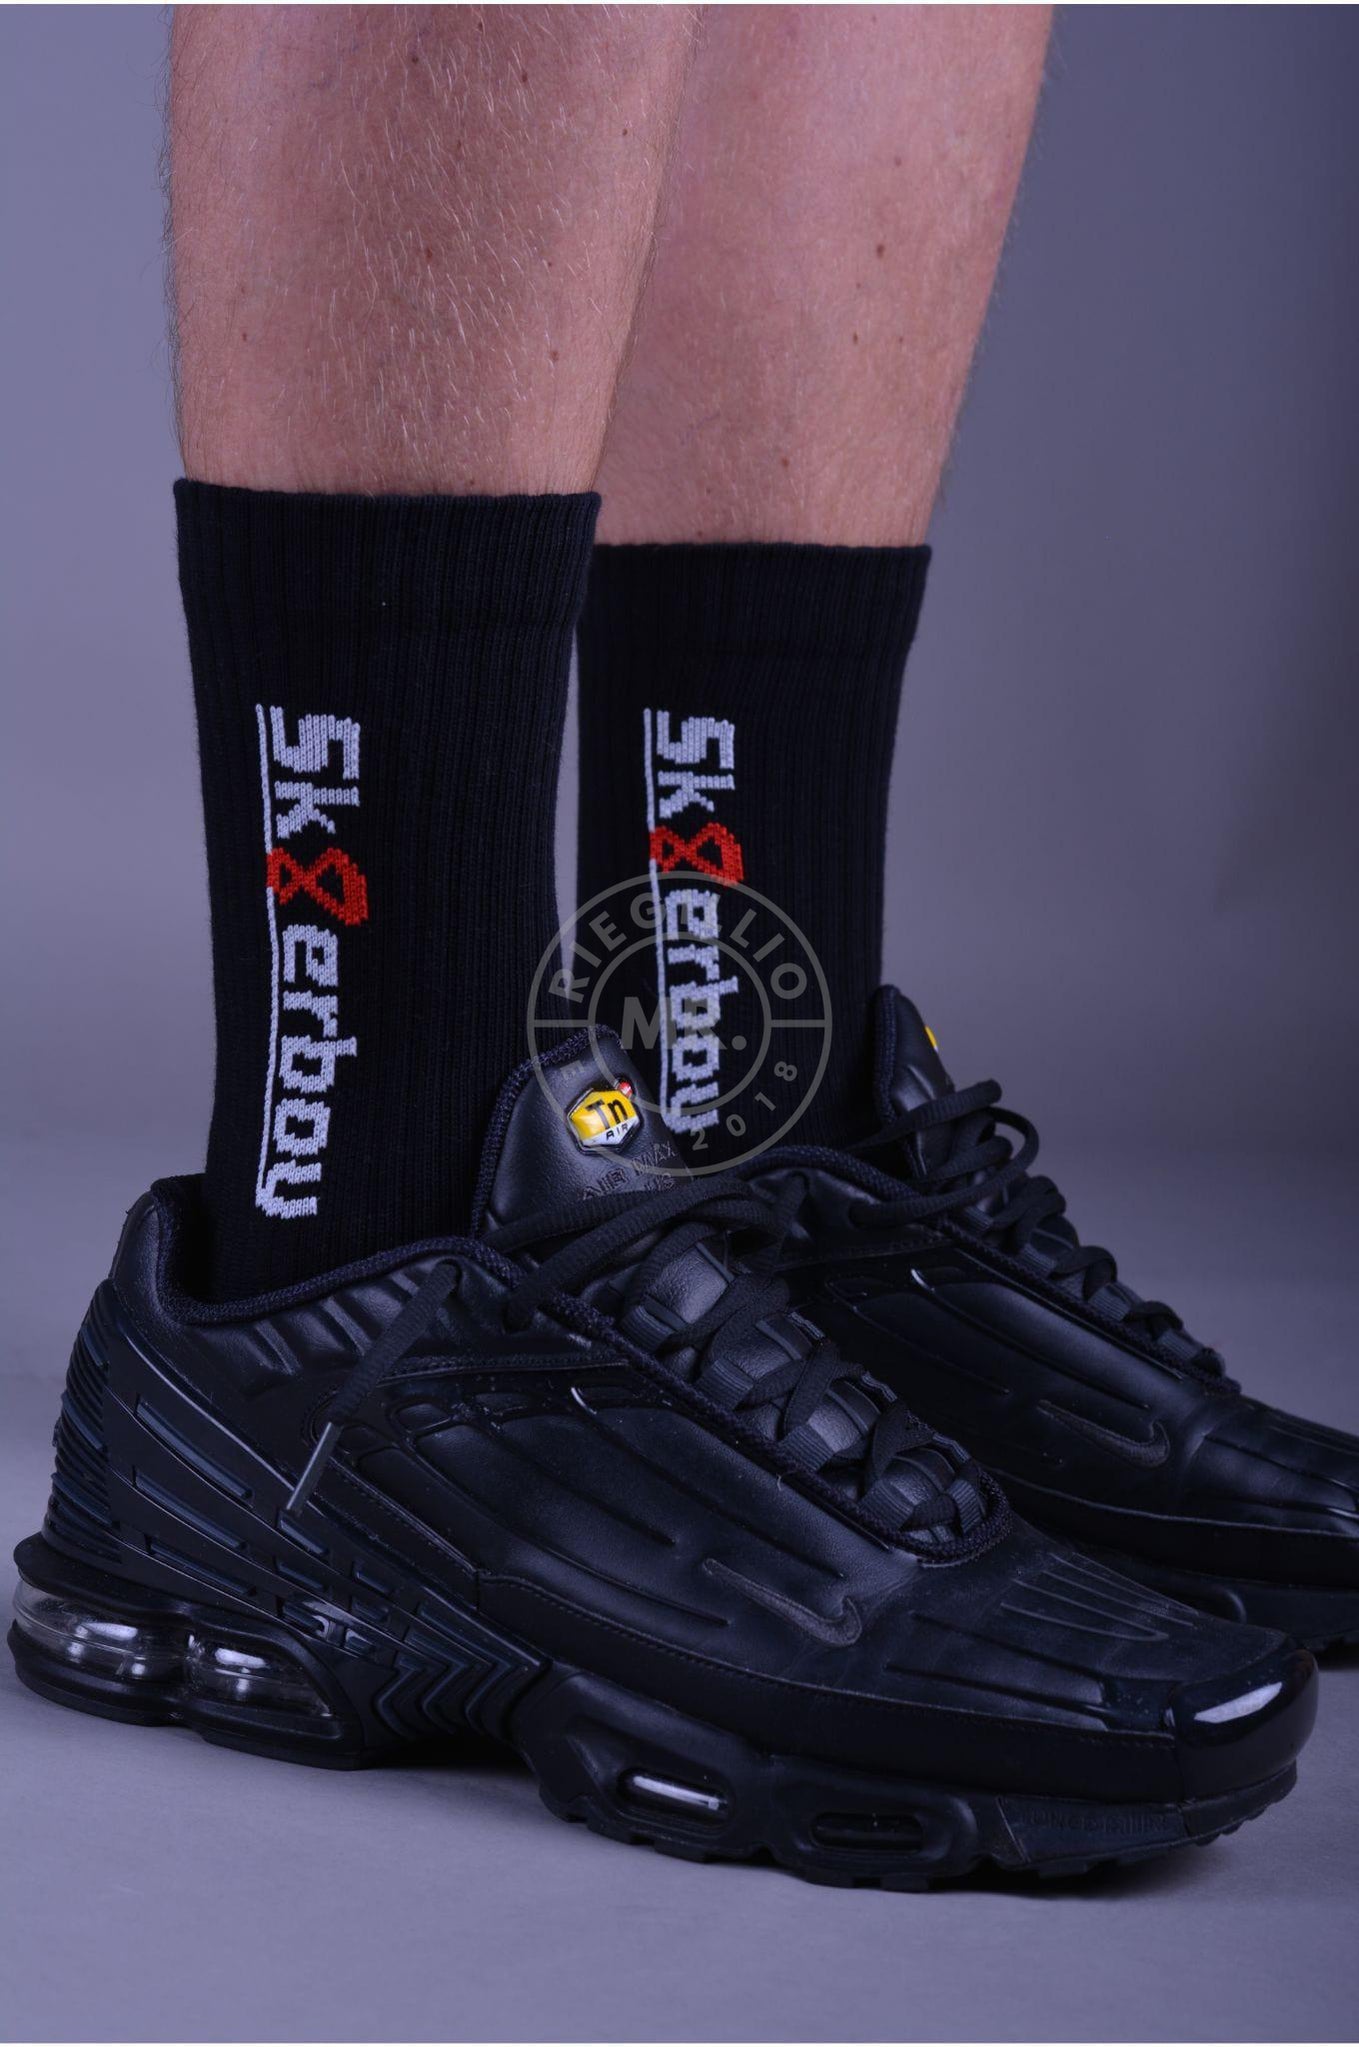 Sk8erboy Crew Socks Black-at MR. Riegillio